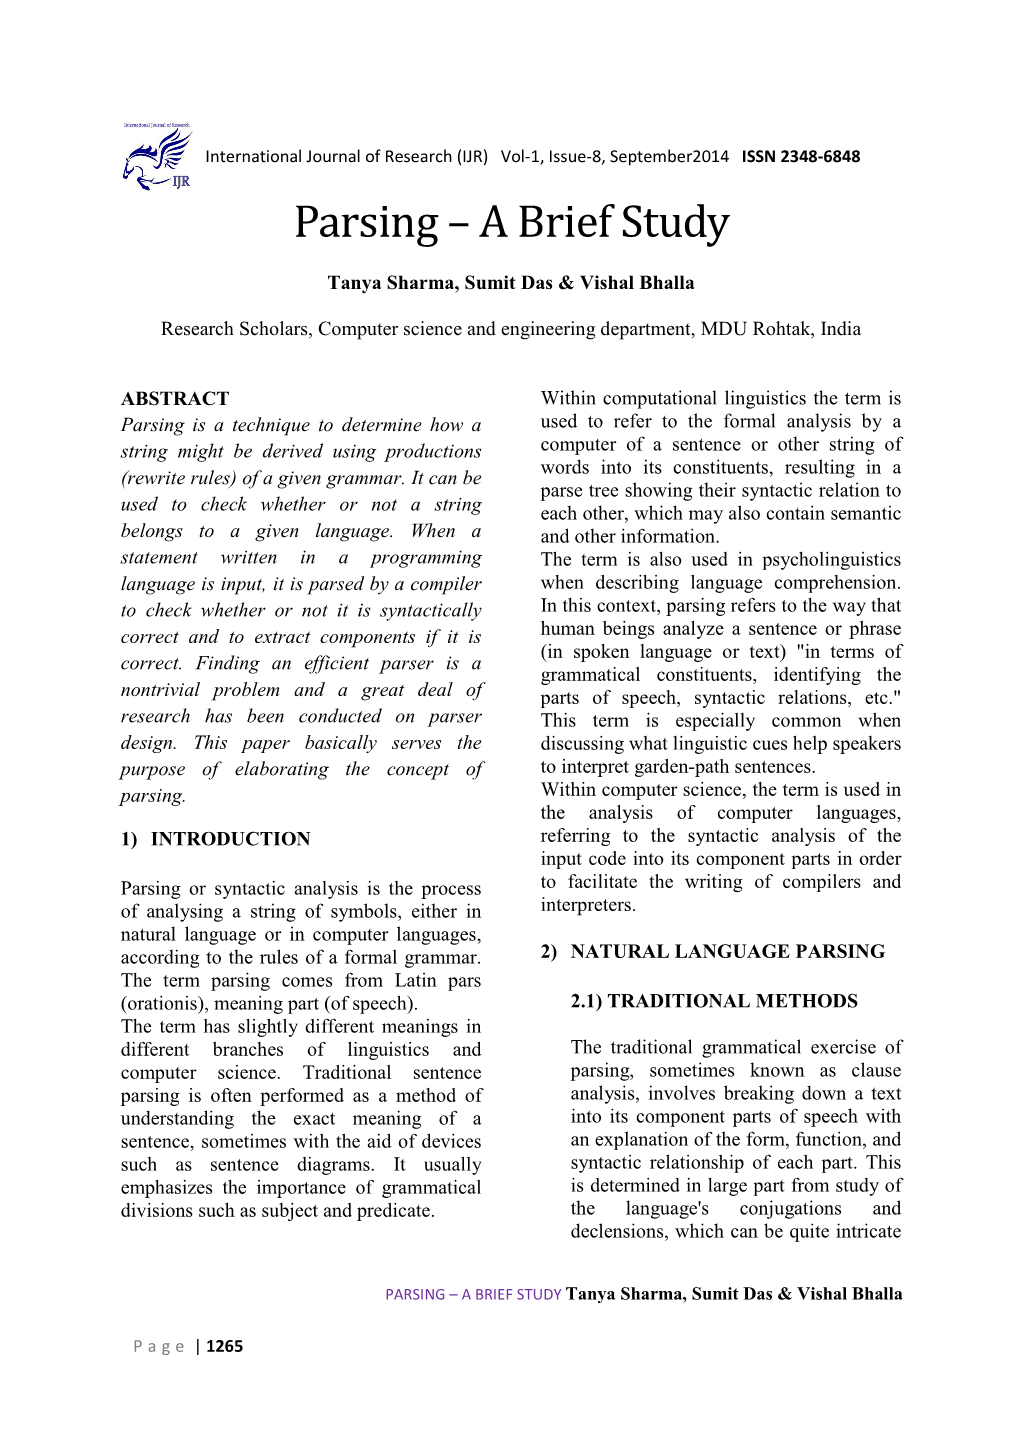 PARSING-Brief Study-Tanya Sharma, Sumit Das & Vishal Bhalla